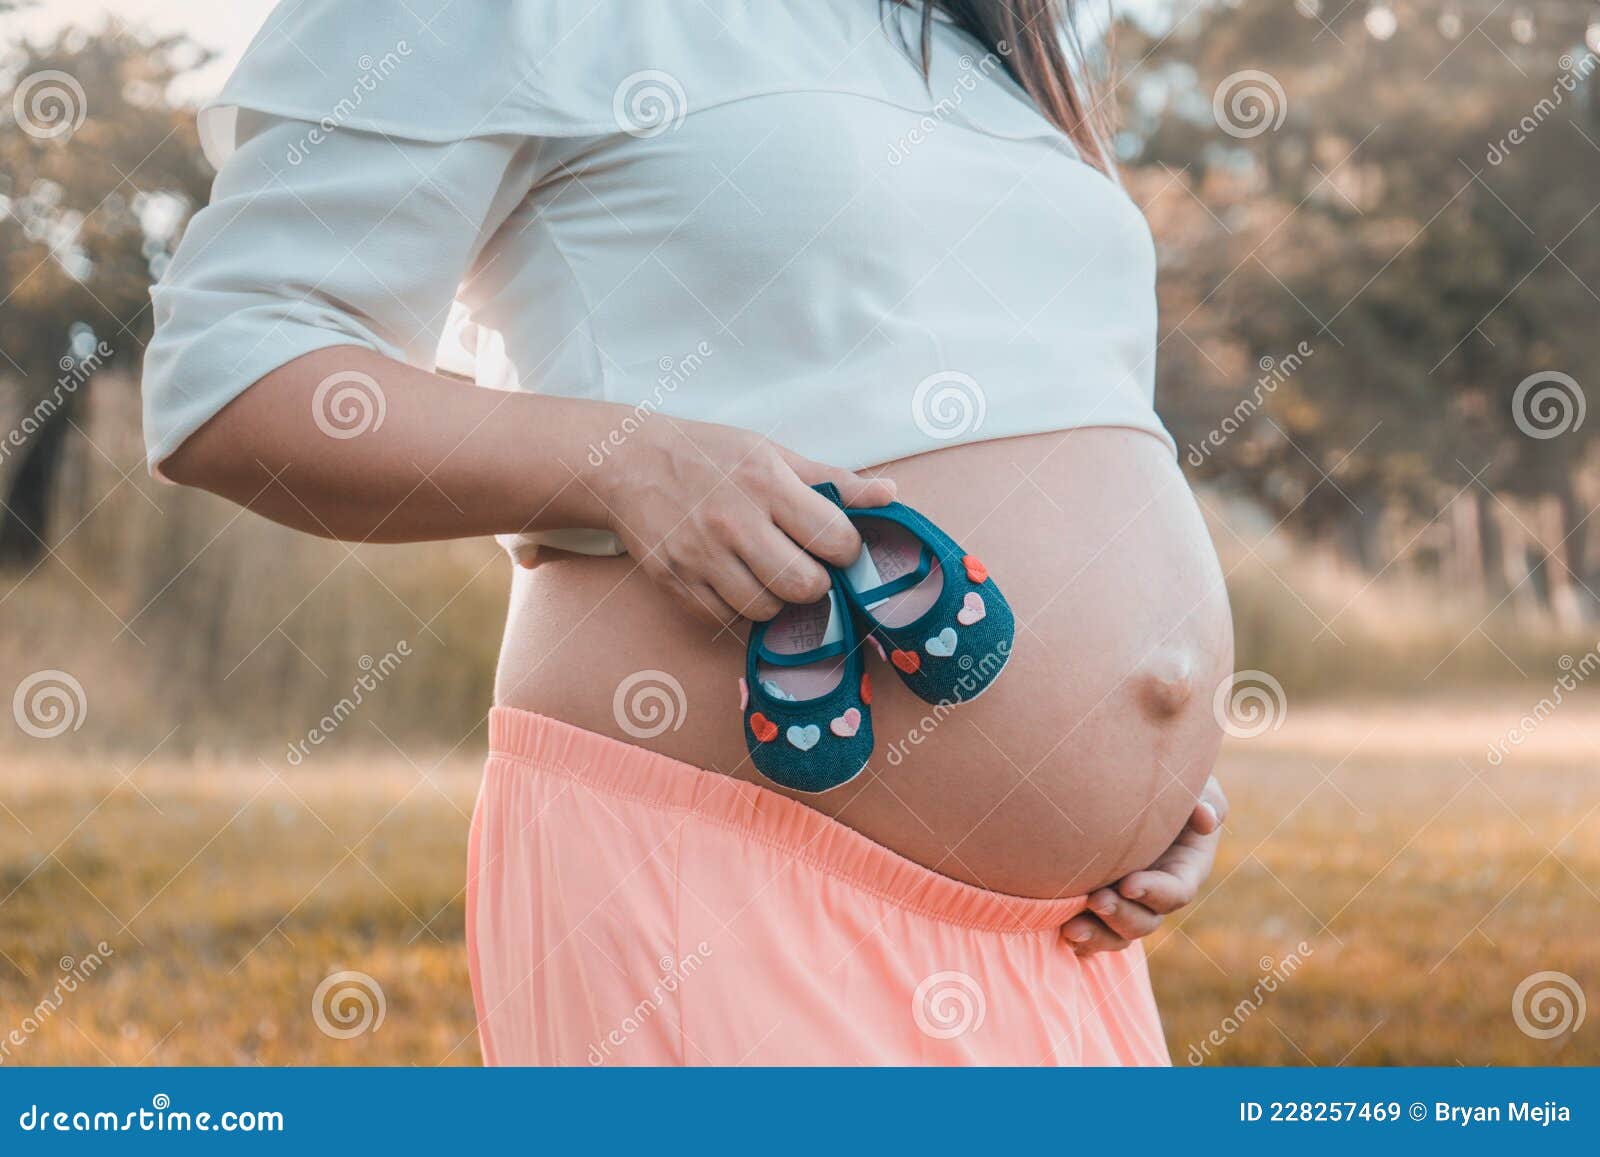 beautiful pregnancy moment